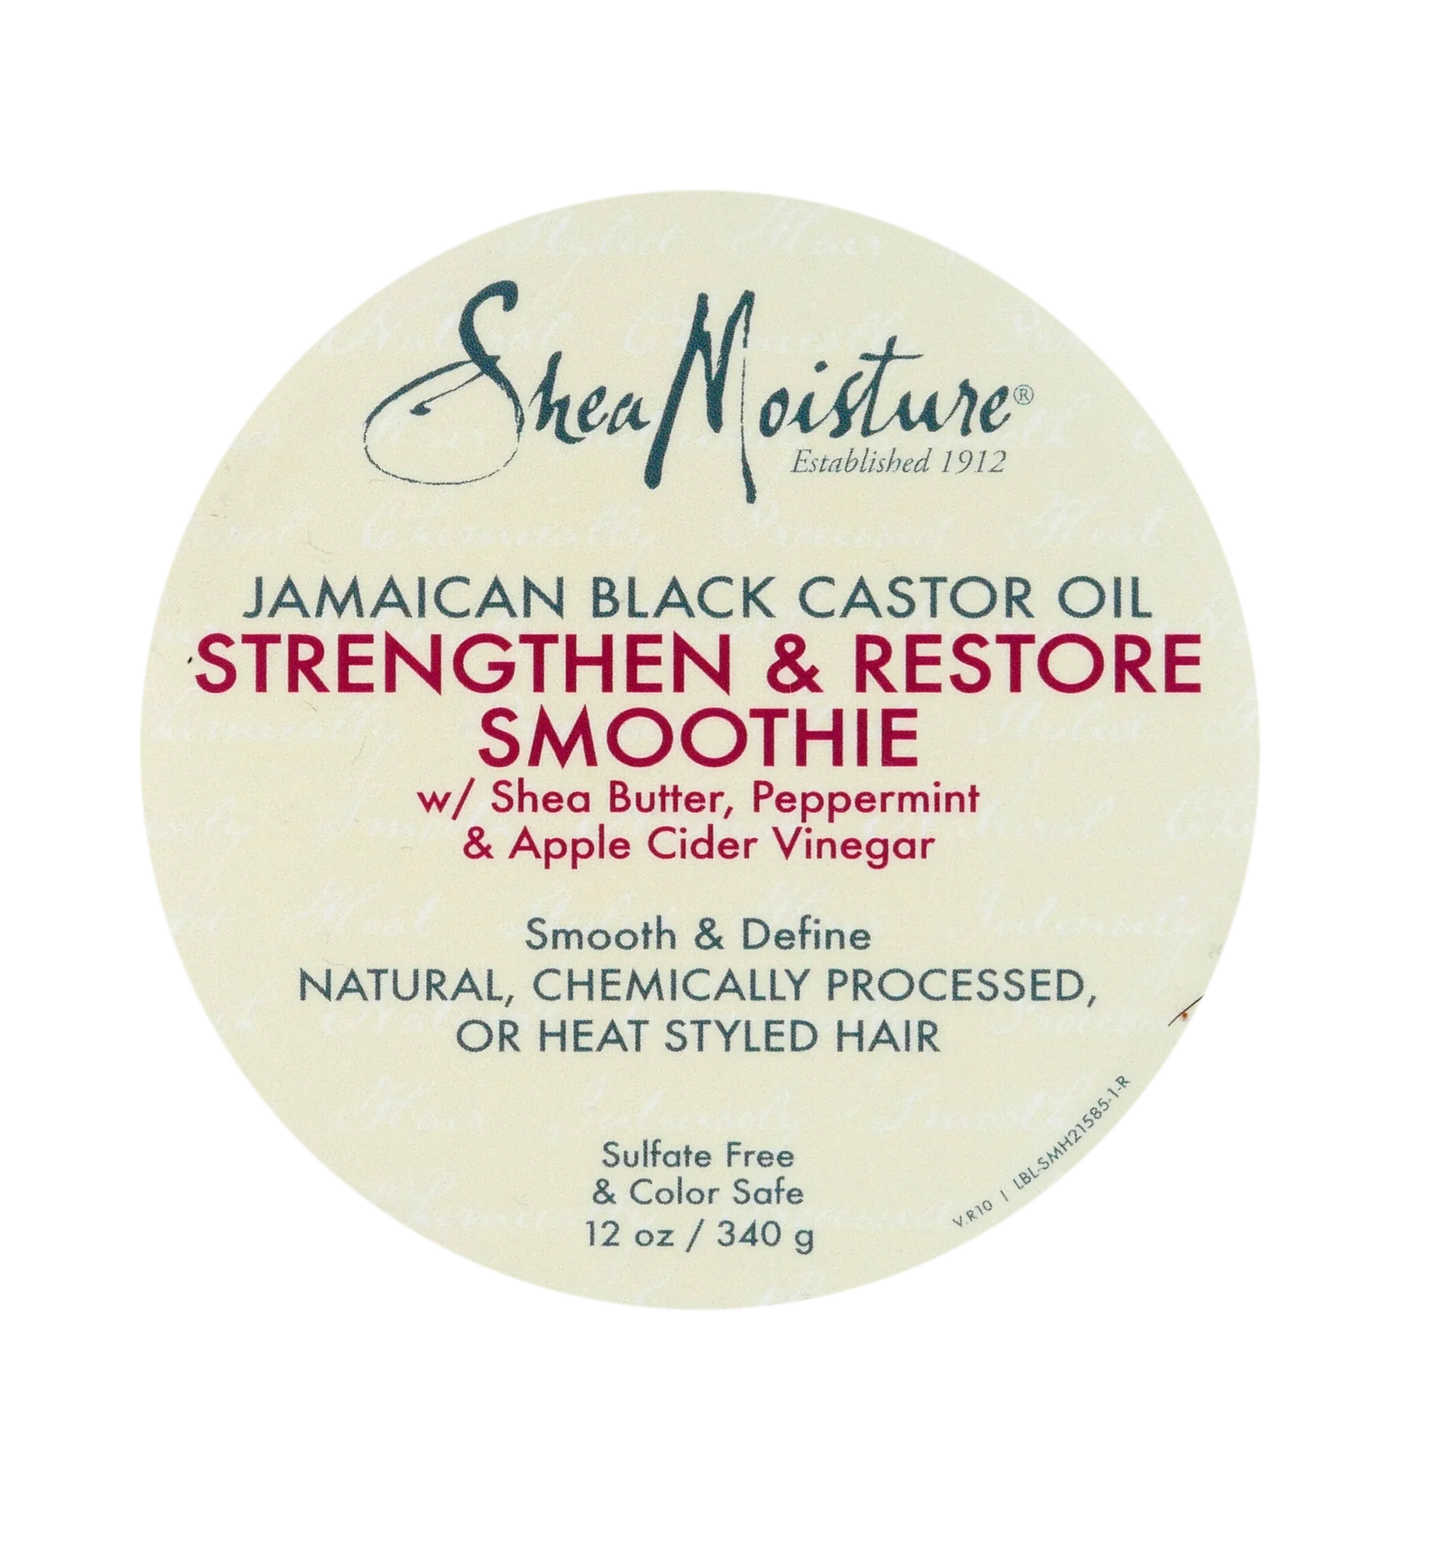 Shea Moisture Jamaican Black Castor Oil Strengthen & Restore Smoothie